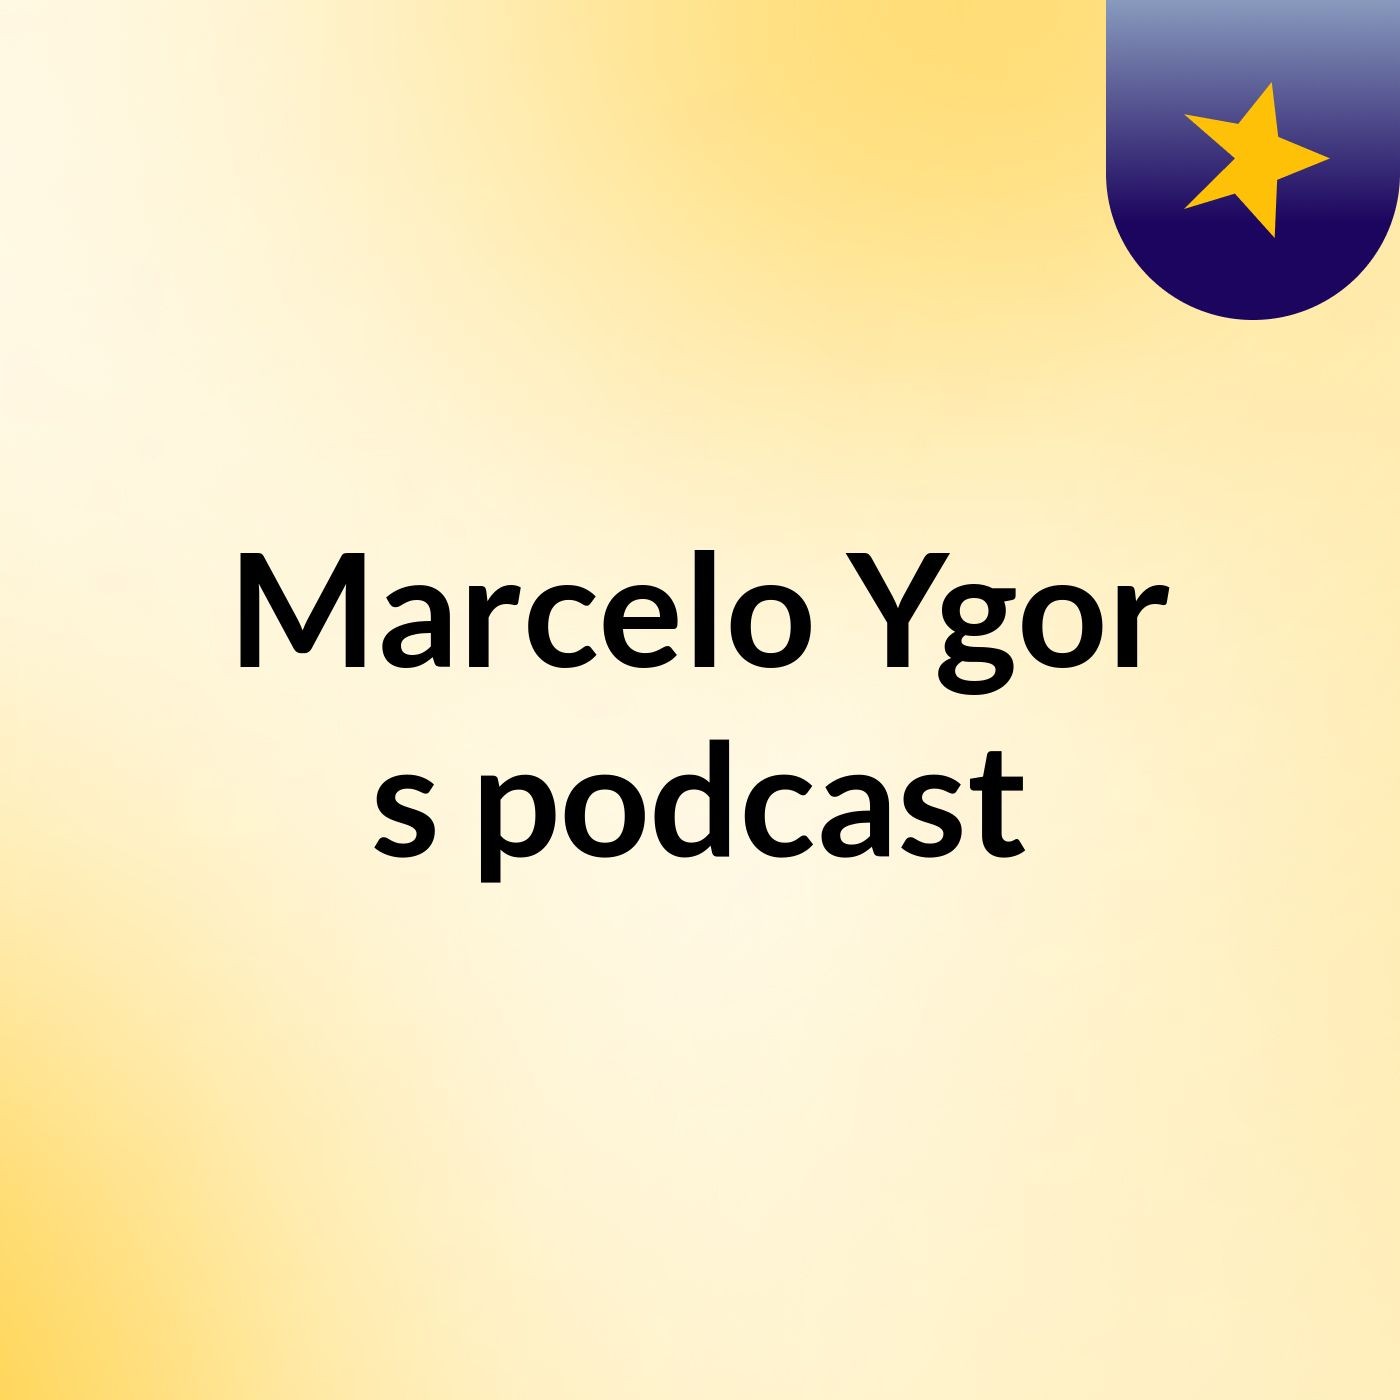 Marcelo Ygor's podcast